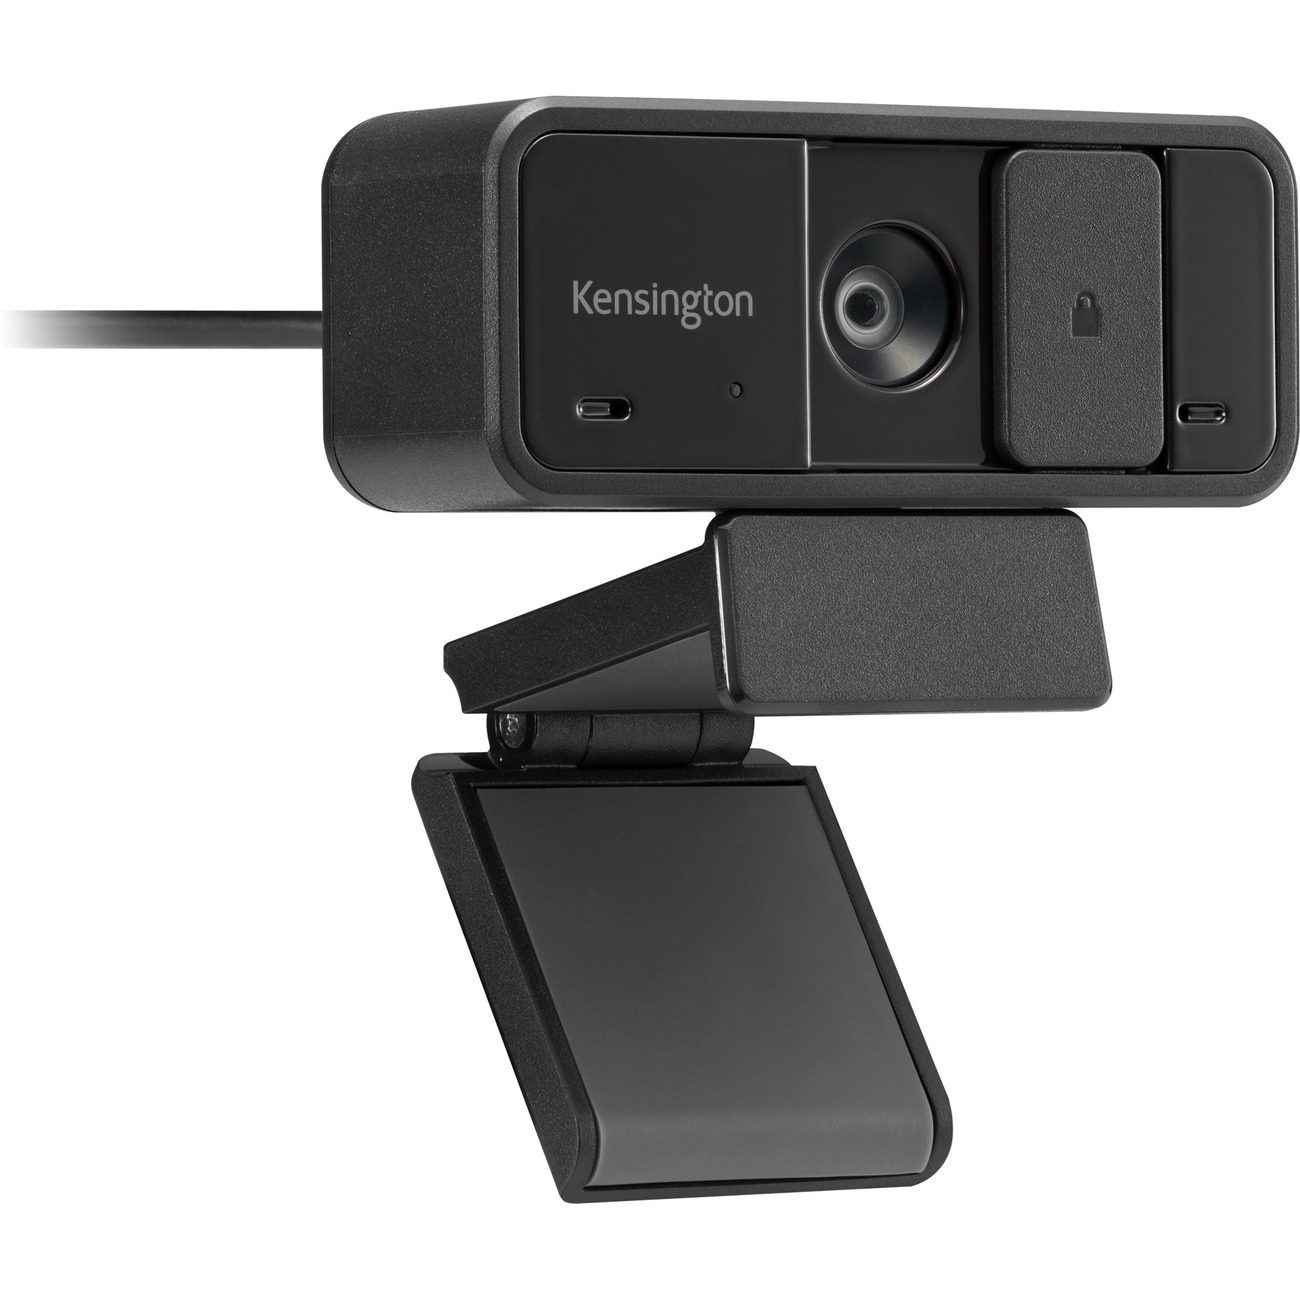  KMWK80250WW  Kensington - Webcam grand angle à focale fixe W1050  1080p